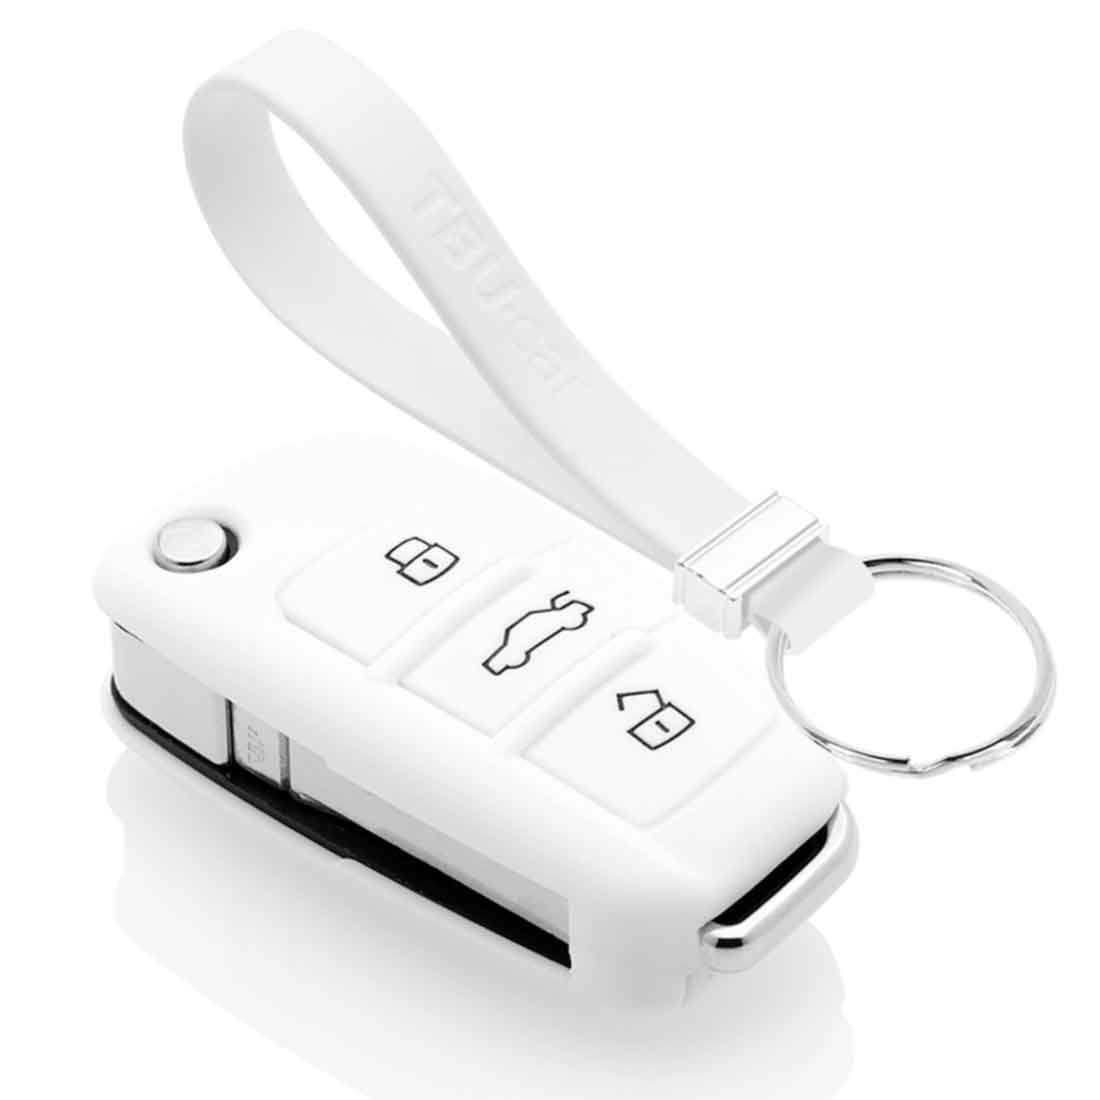 Autoschlüssel Etui Schlüsselanhänger Abdeckung für Audi 3 Tasten Silikon